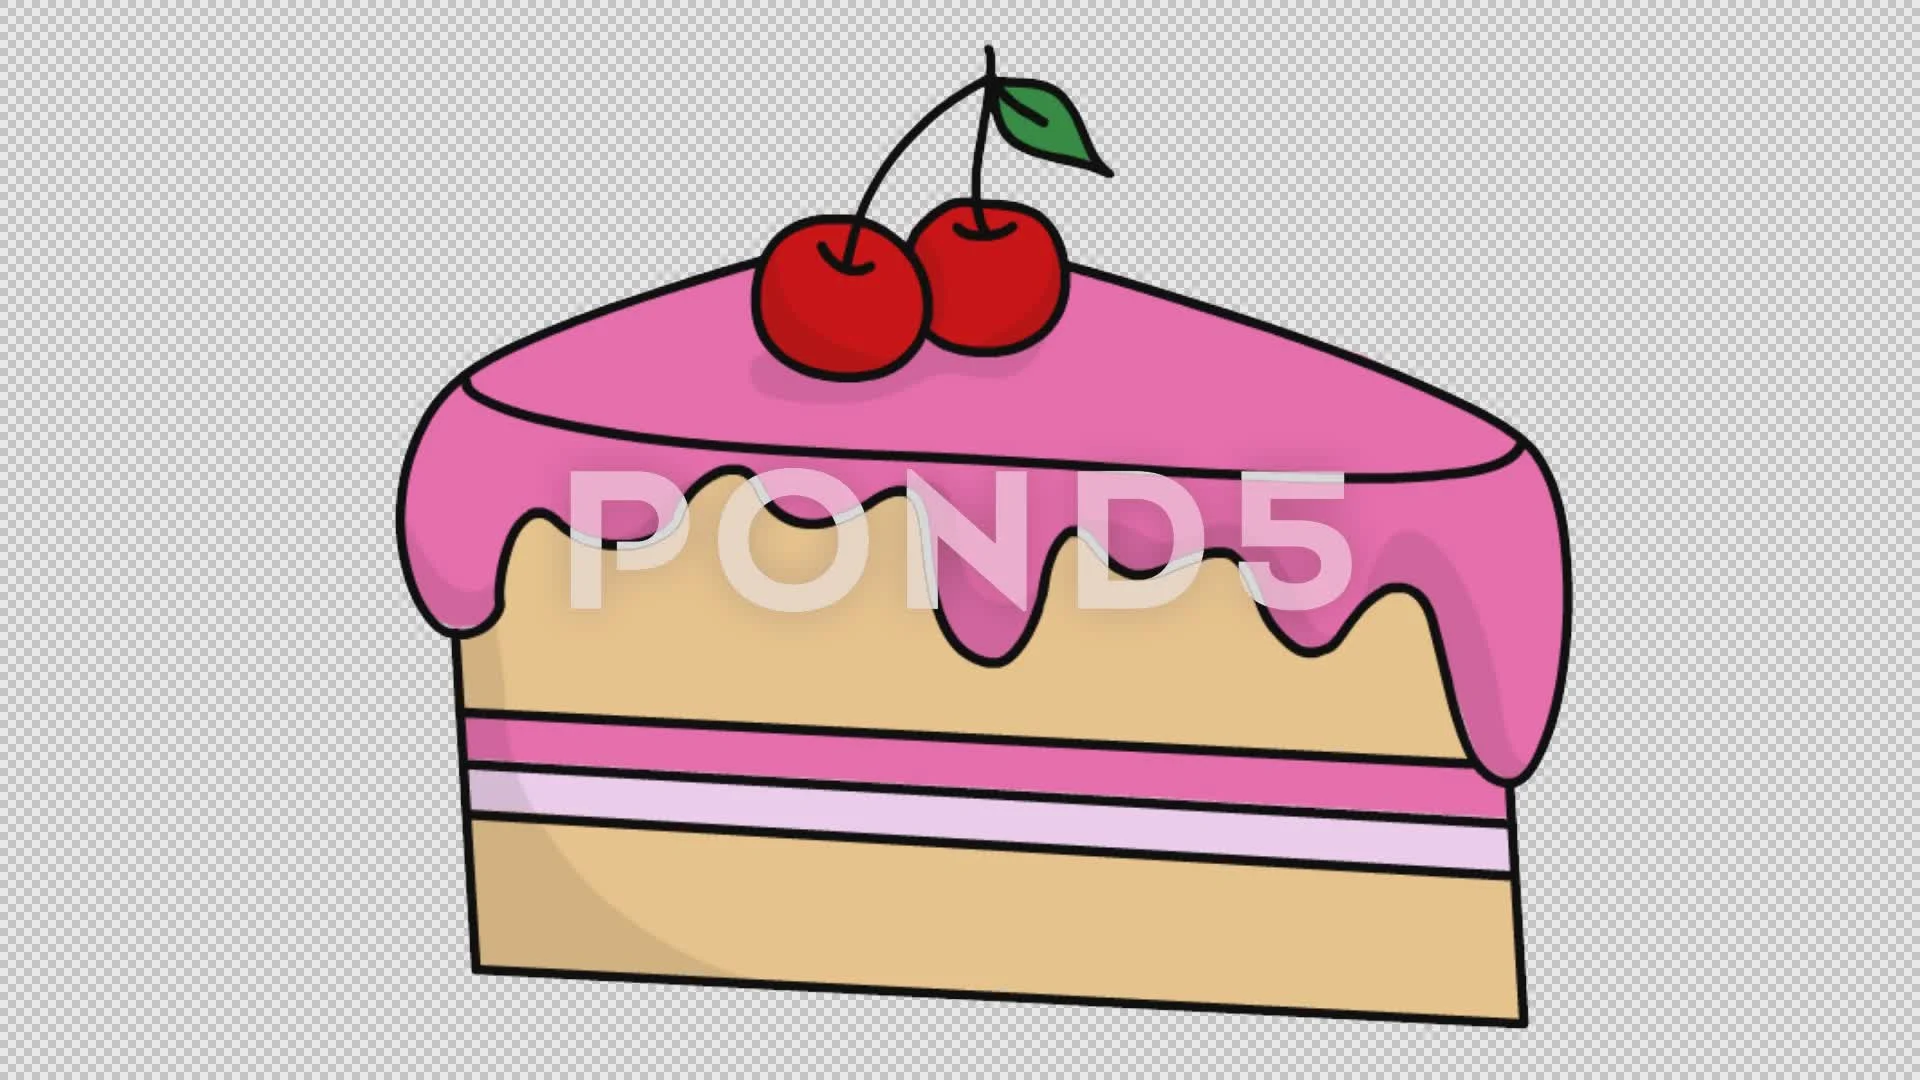 9100 Slice Of Cake Illustrations RoyaltyFree Vector Graphics  Clip Art   iStock  Cake Birthday cake Cupcake